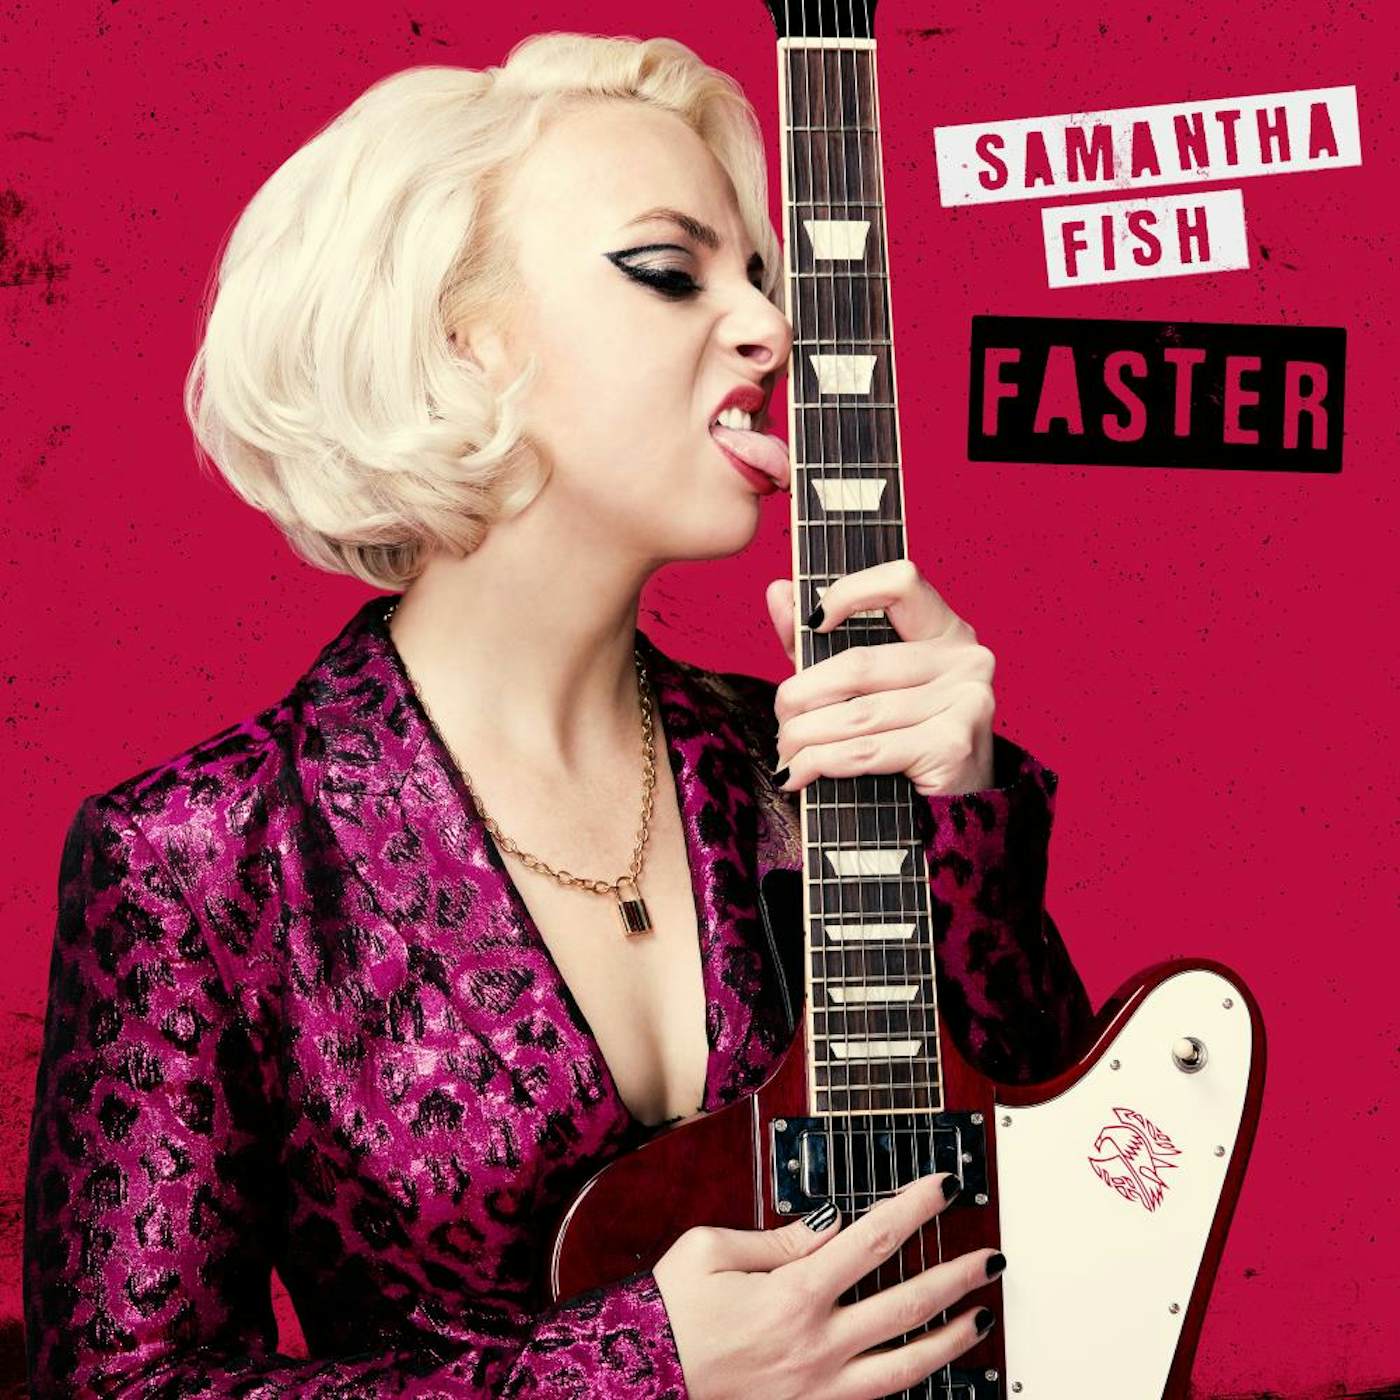 Samantha Fish Faster Vinyl Record